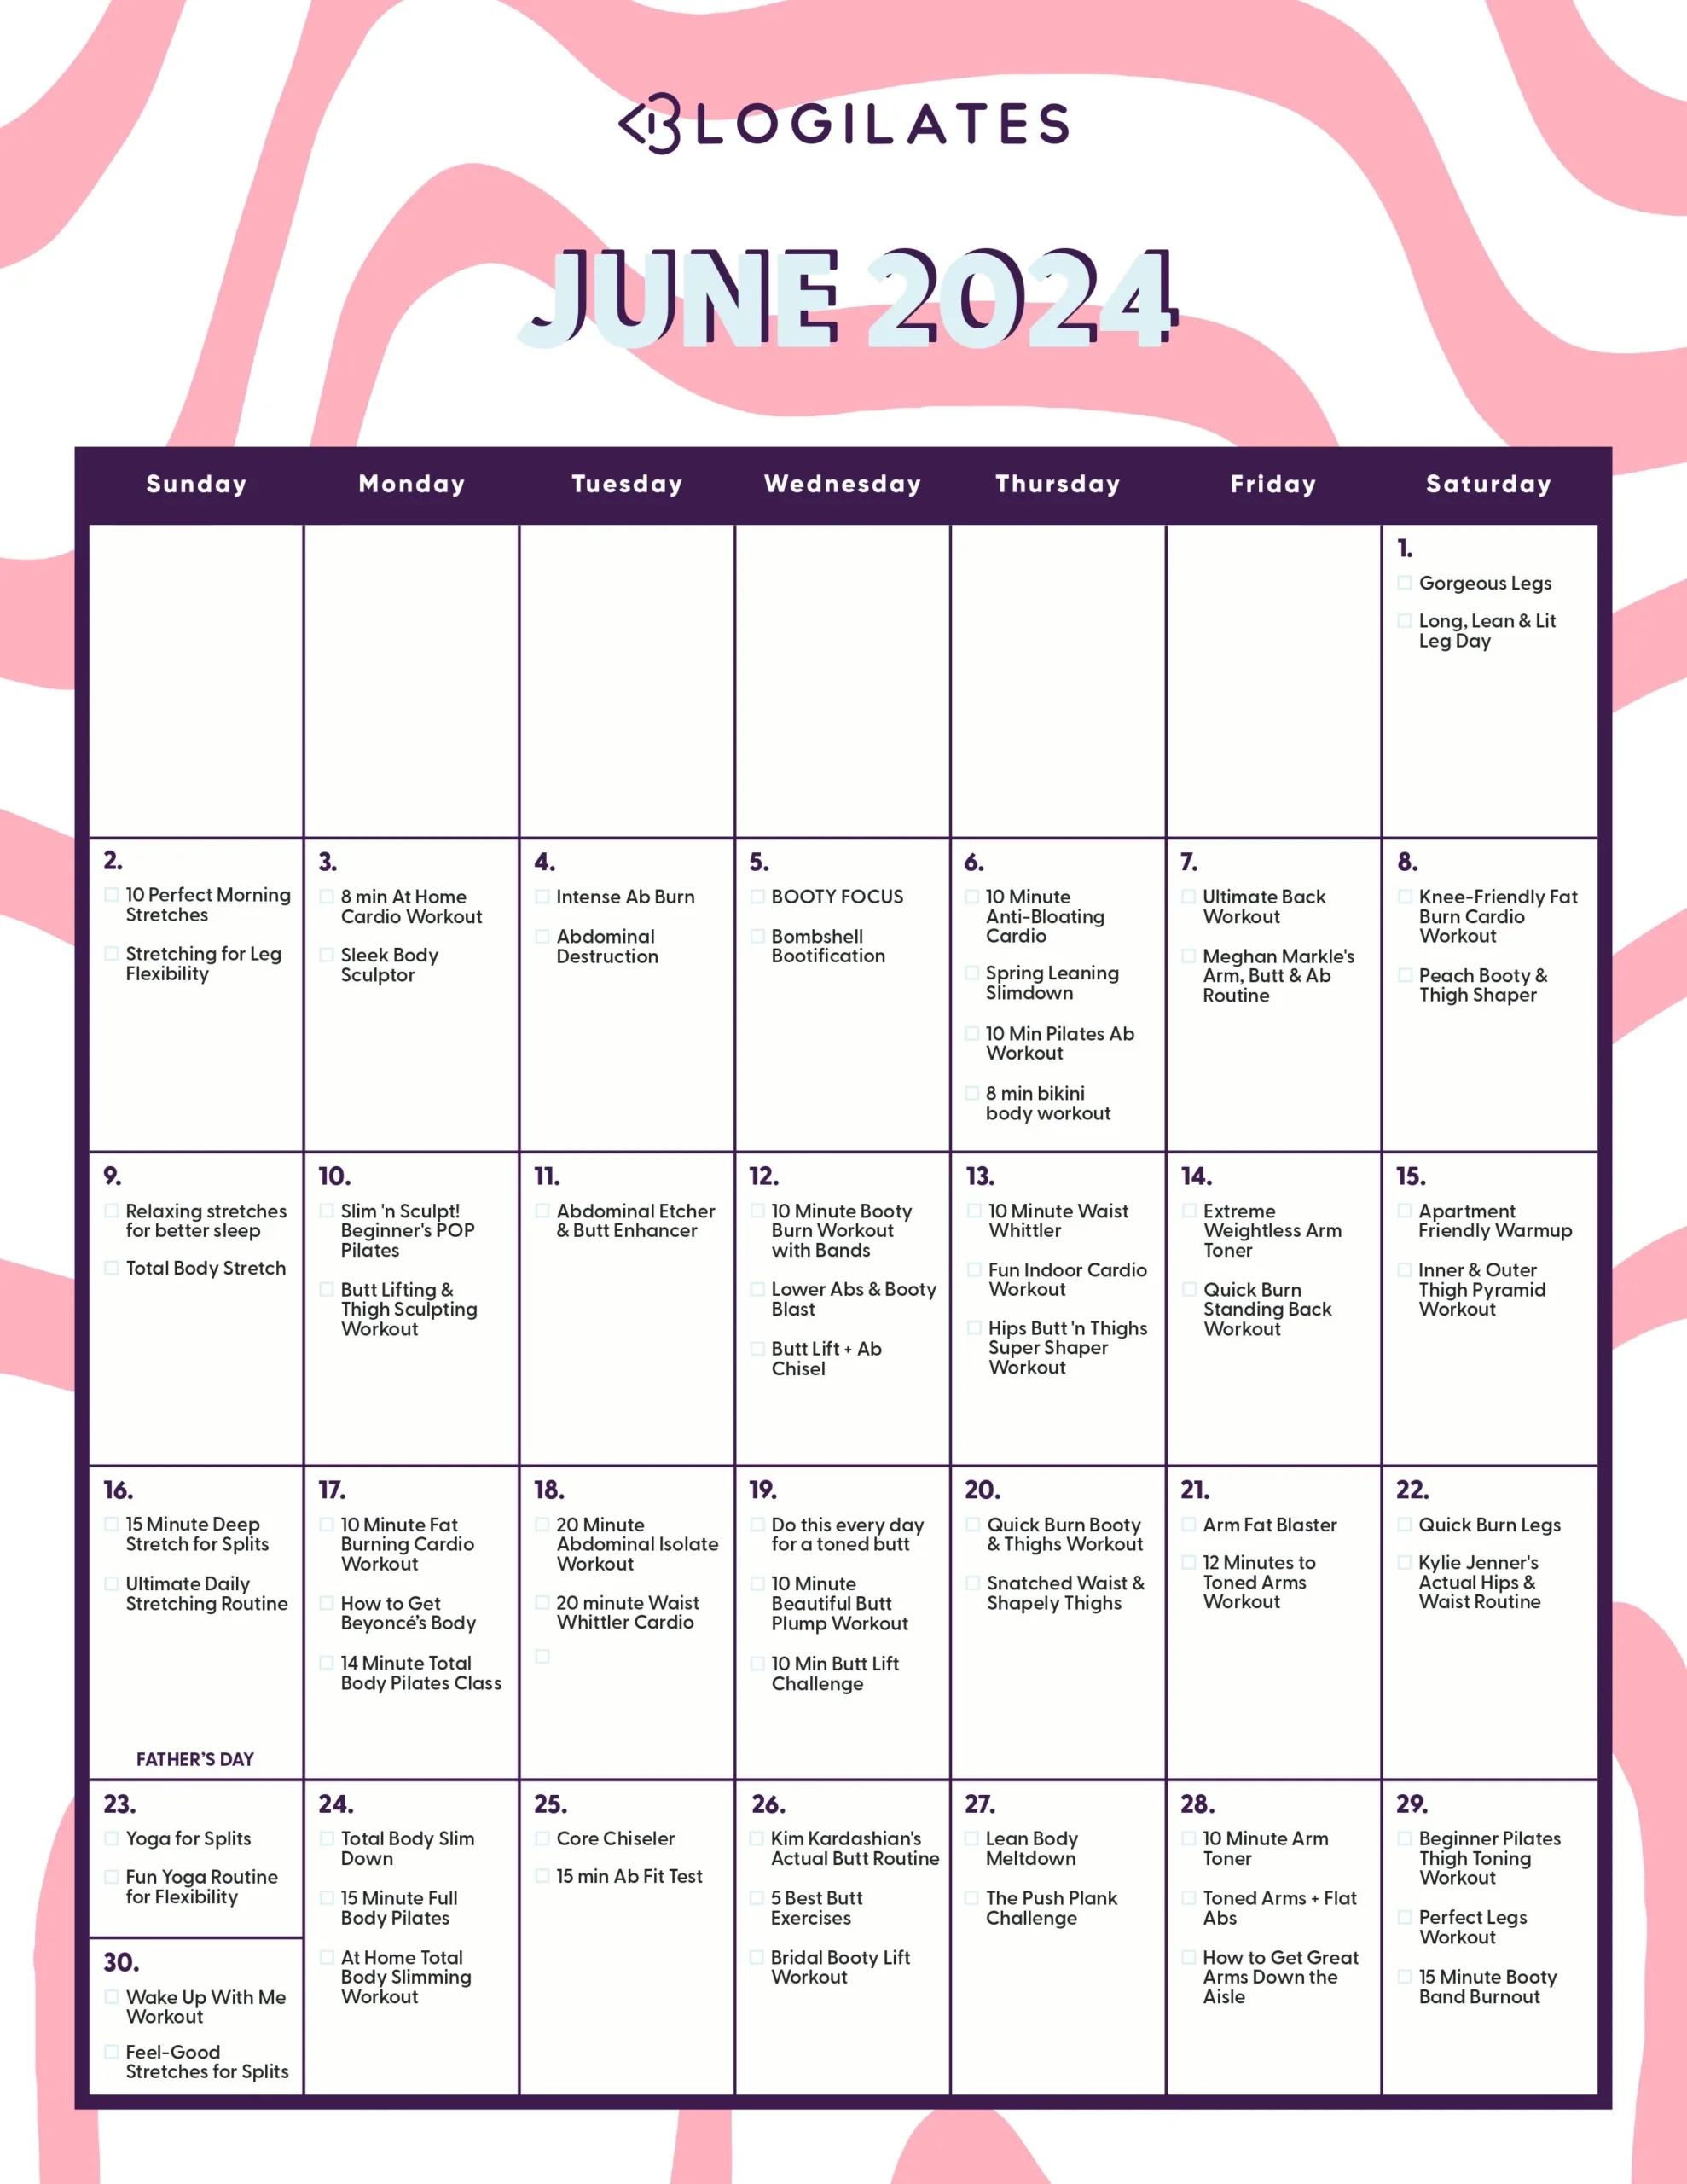 Your Blogilates June 2024 Workout Calendar!! - Blogilates | Blogilates July 2024 Calendar